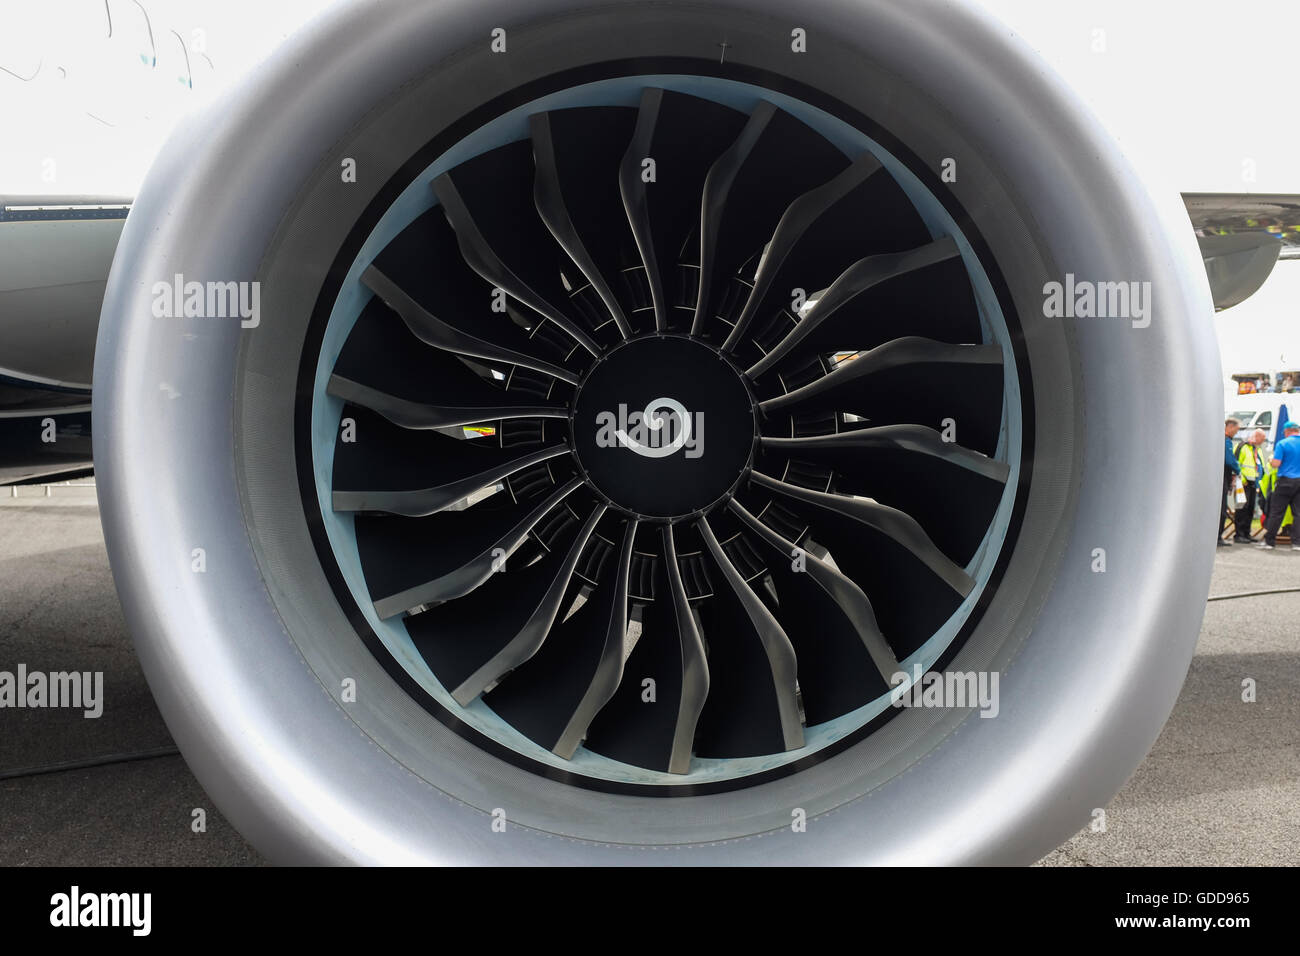 A Rolls-Royce jet engine. Stock Photo